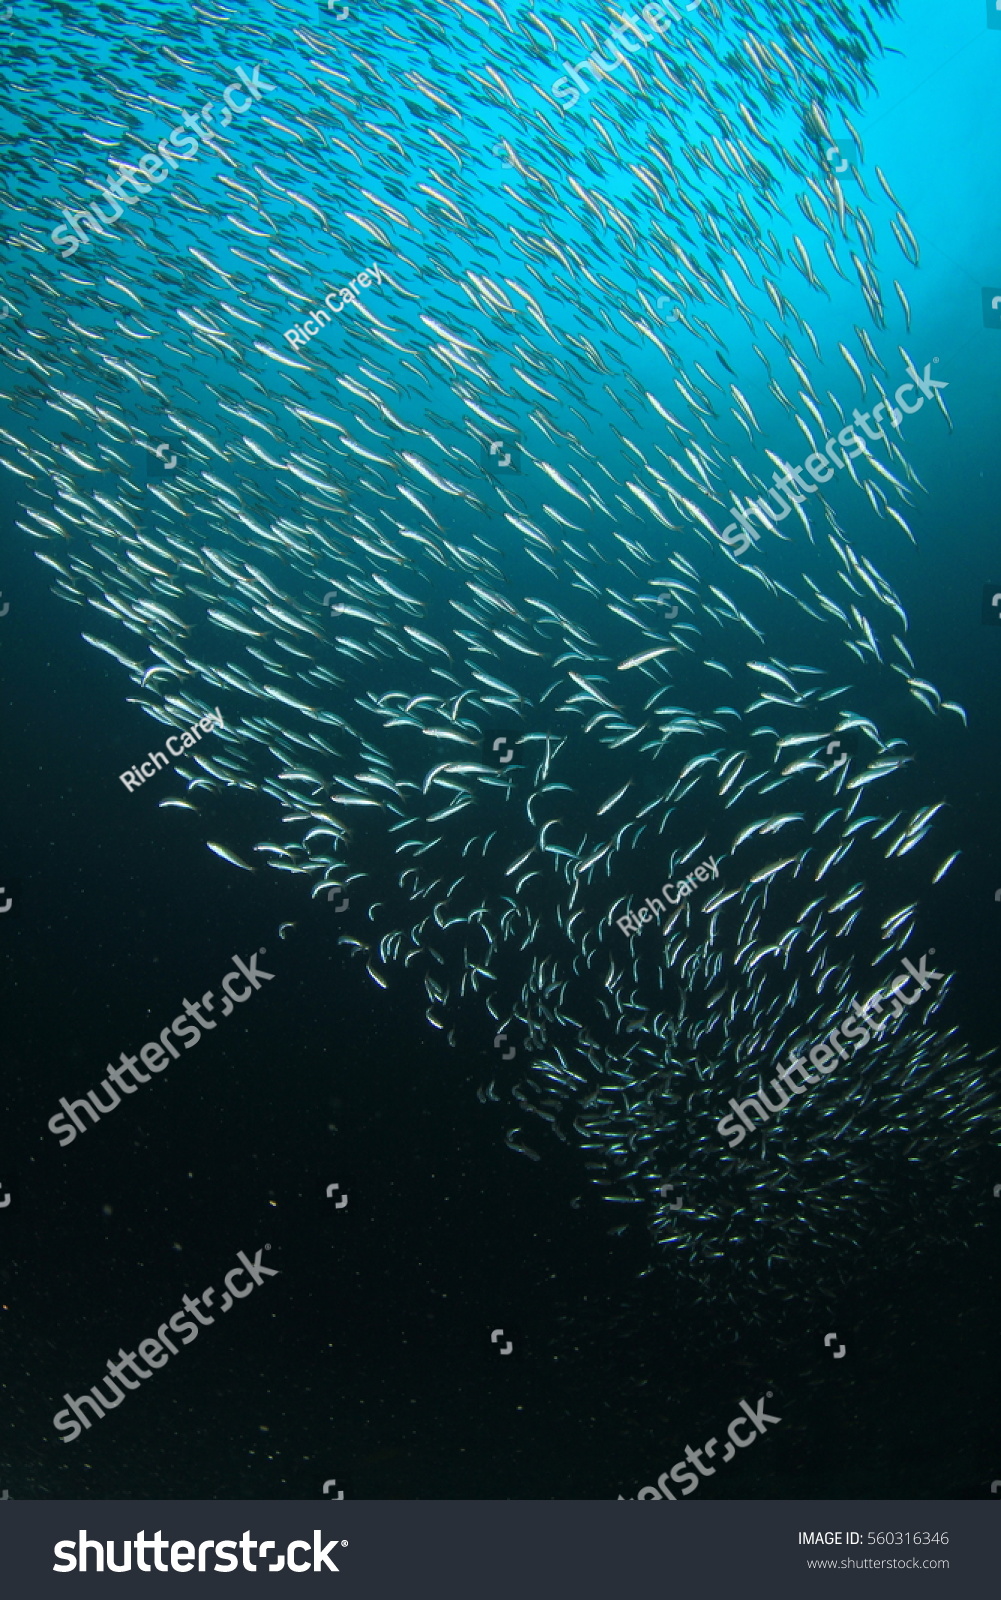 Sardines fish in ocean #560316346